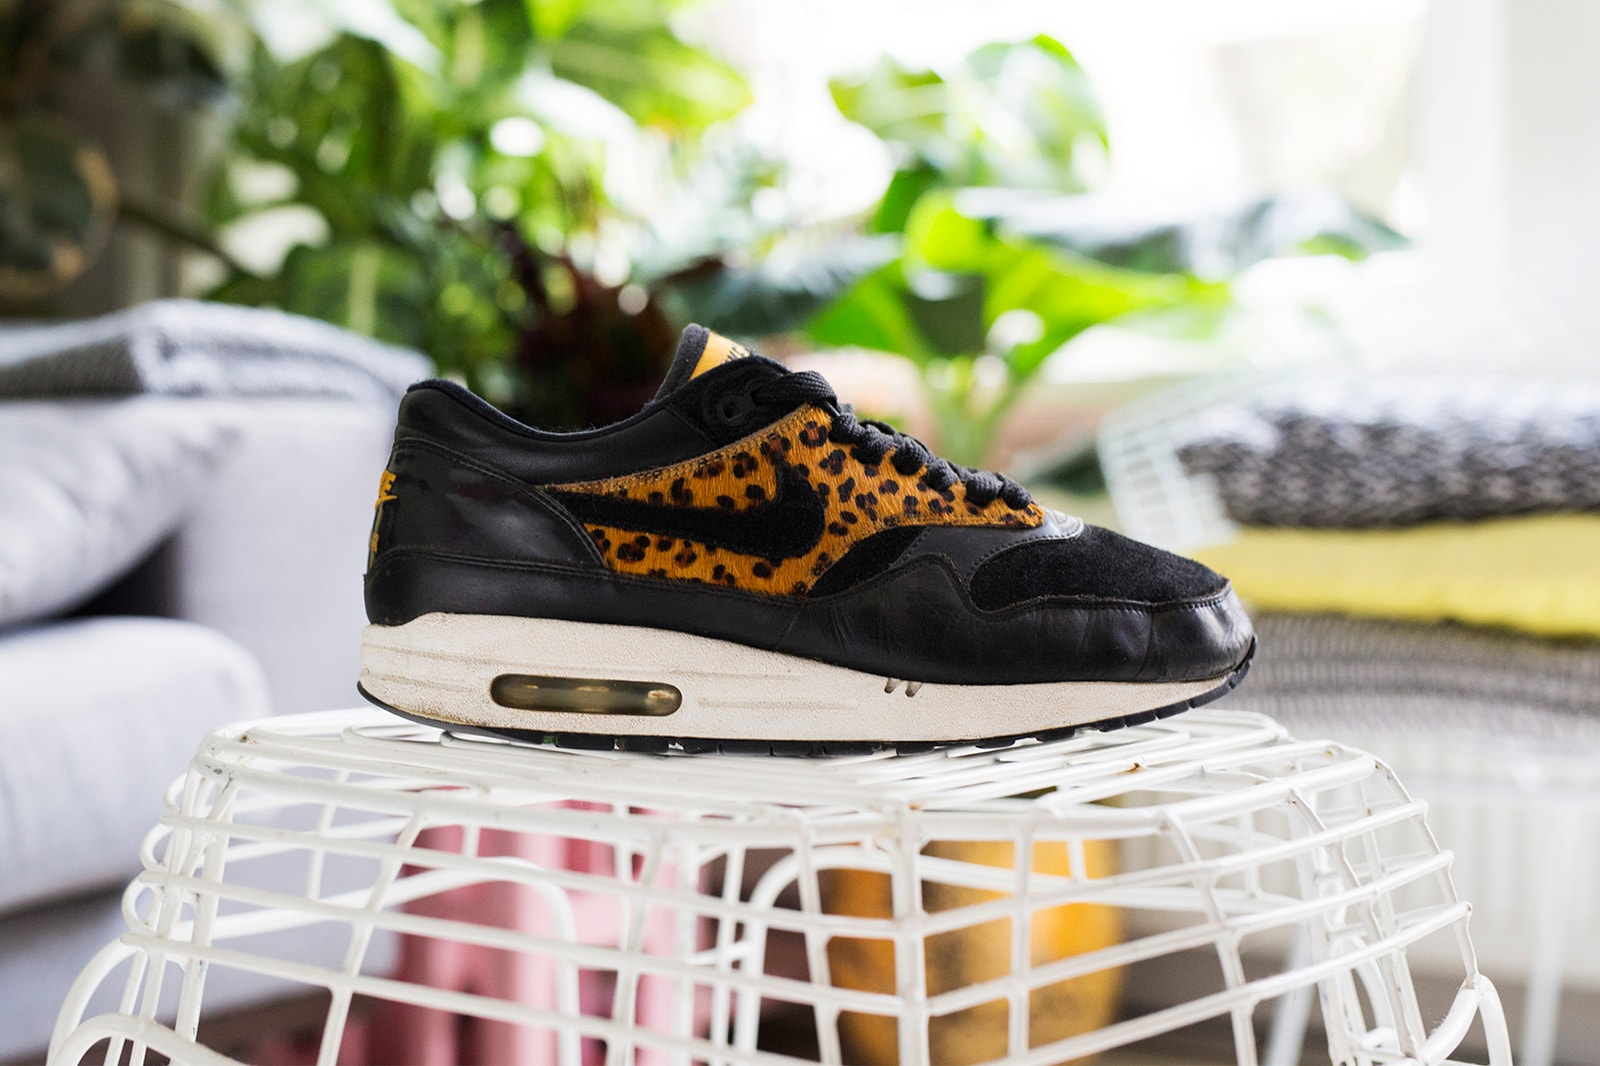 Sanne Poeze Girl on Kicks Amsterdam Netherlands Dutch Sneaker Blogger Collector Interview